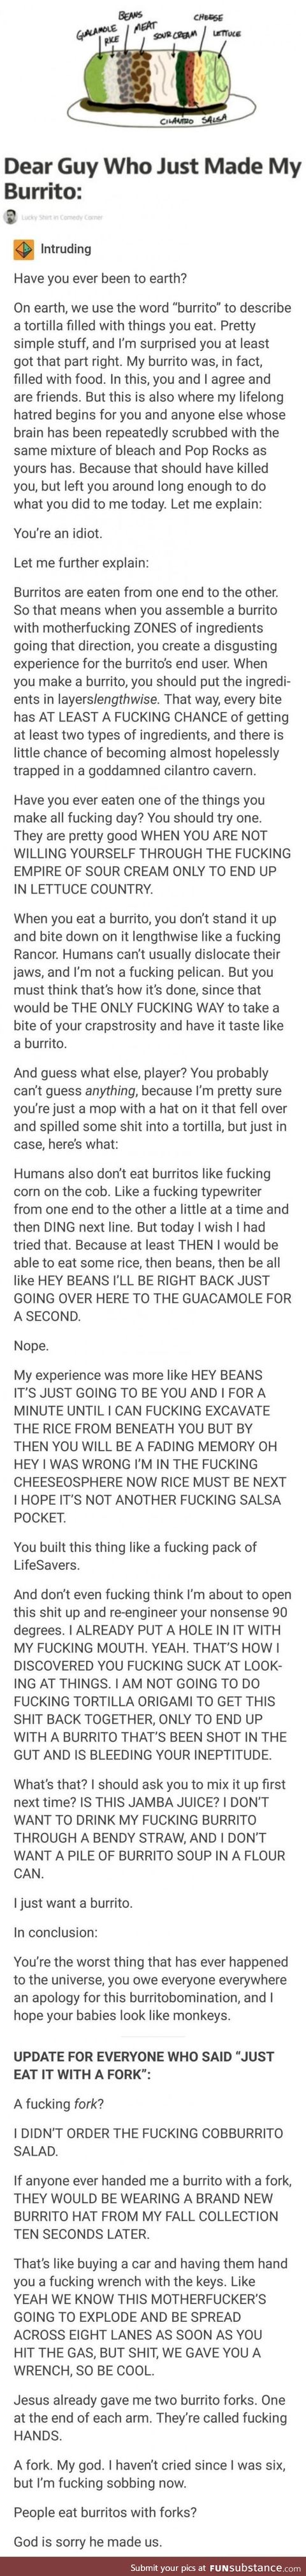 Not how you make a goddamn burritooooooooo